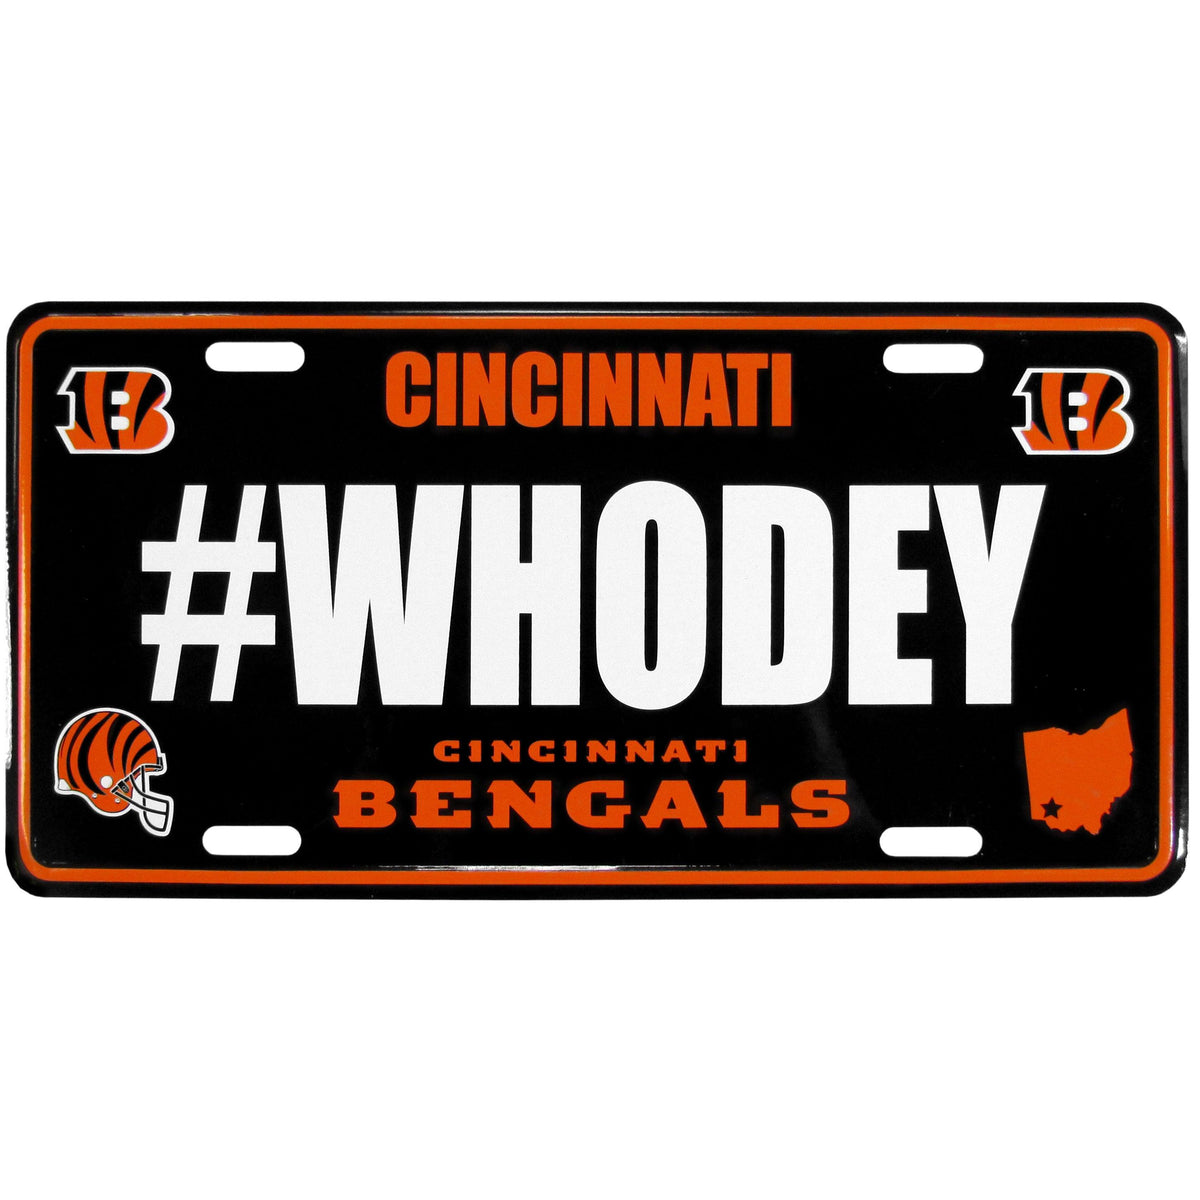 Cincinnati Bengals Hashtag License Plate - Flyclothing LLC